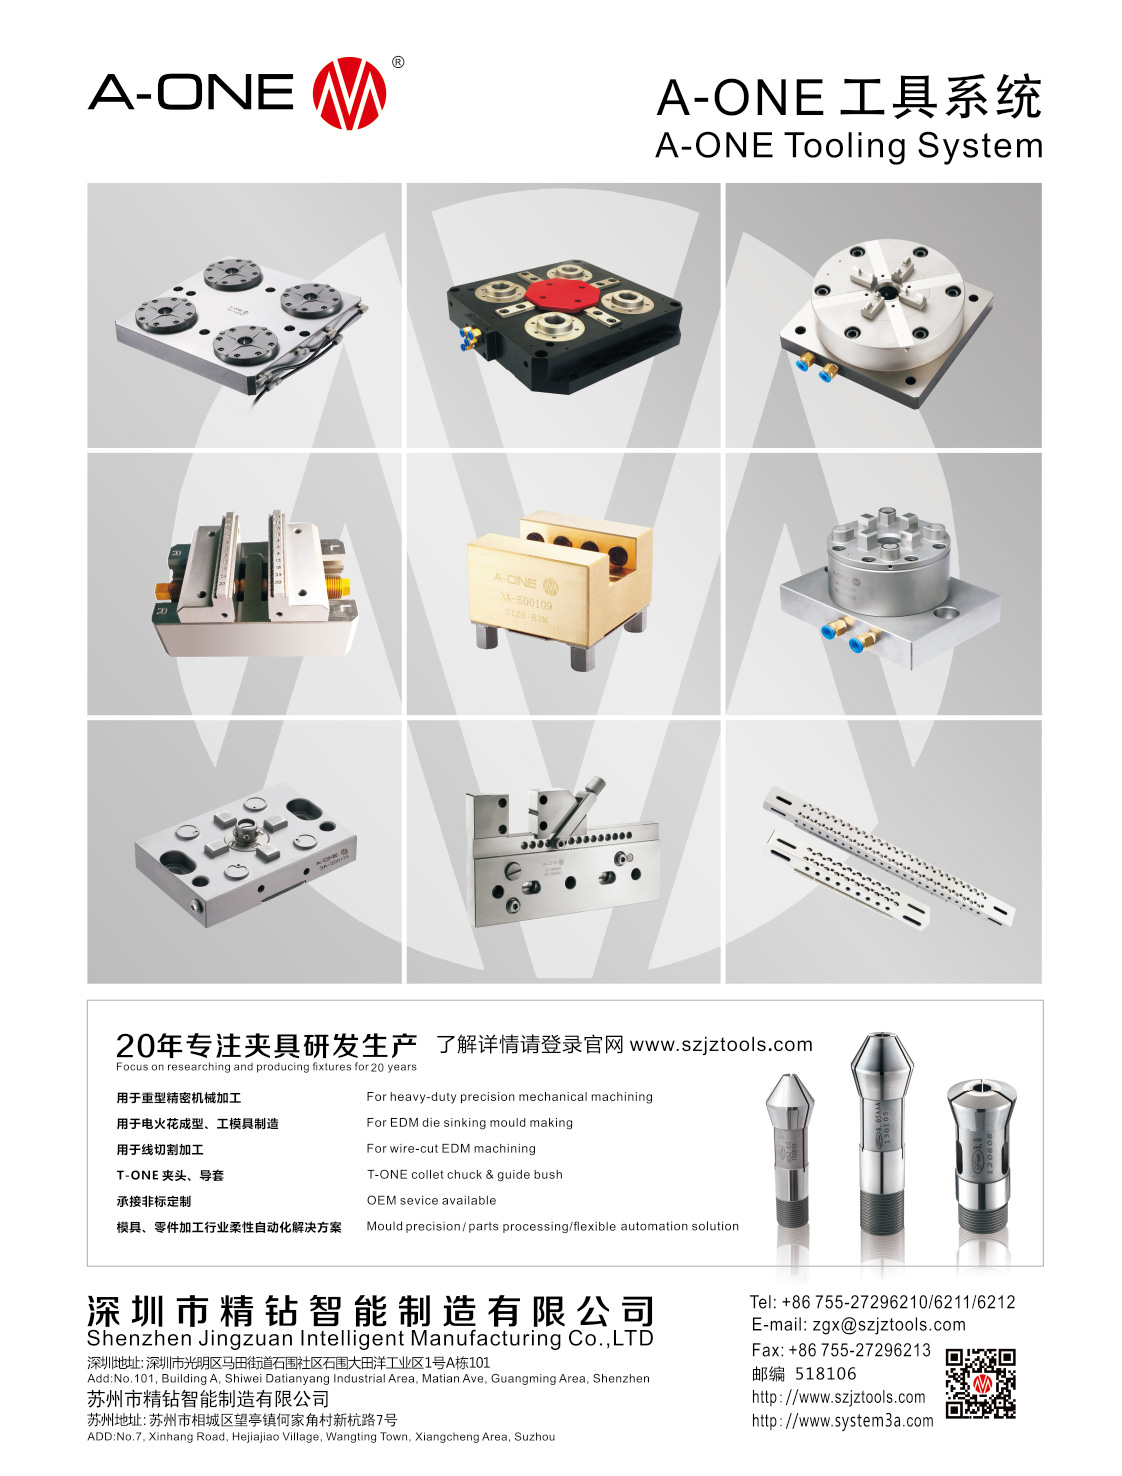 2019 Taiwan Machine Tools & Taiwan Mold